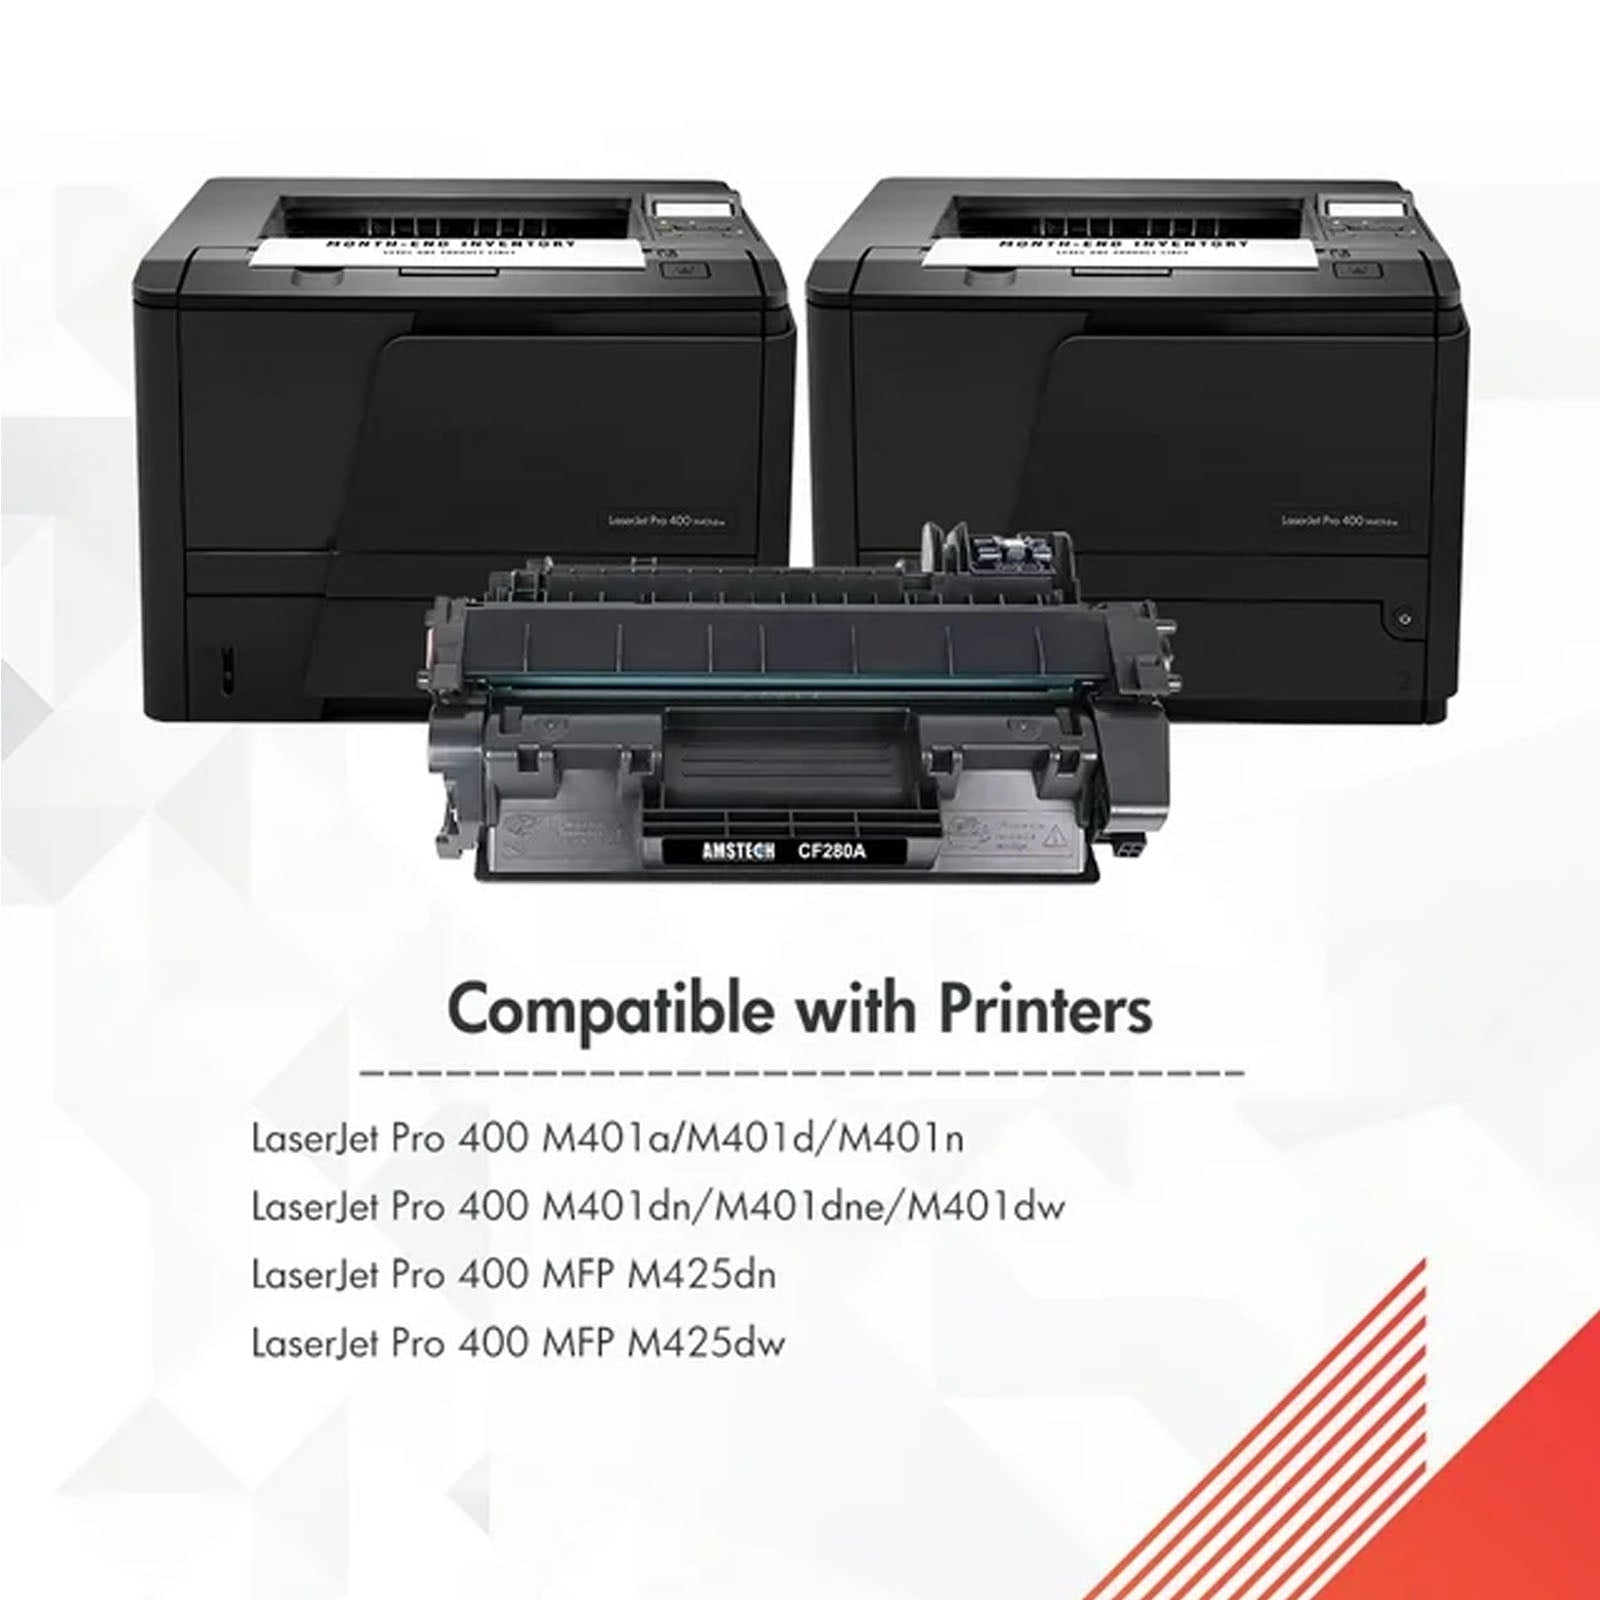 Amstech 2-Pack Compatible Toner Replacement for HP 80A CF280A Laserjet Pro 400 M401a M401d M401n M401dn M401dne M401dw Laserjet Pro 400 MFP M425DN M425dw Printers(Black)